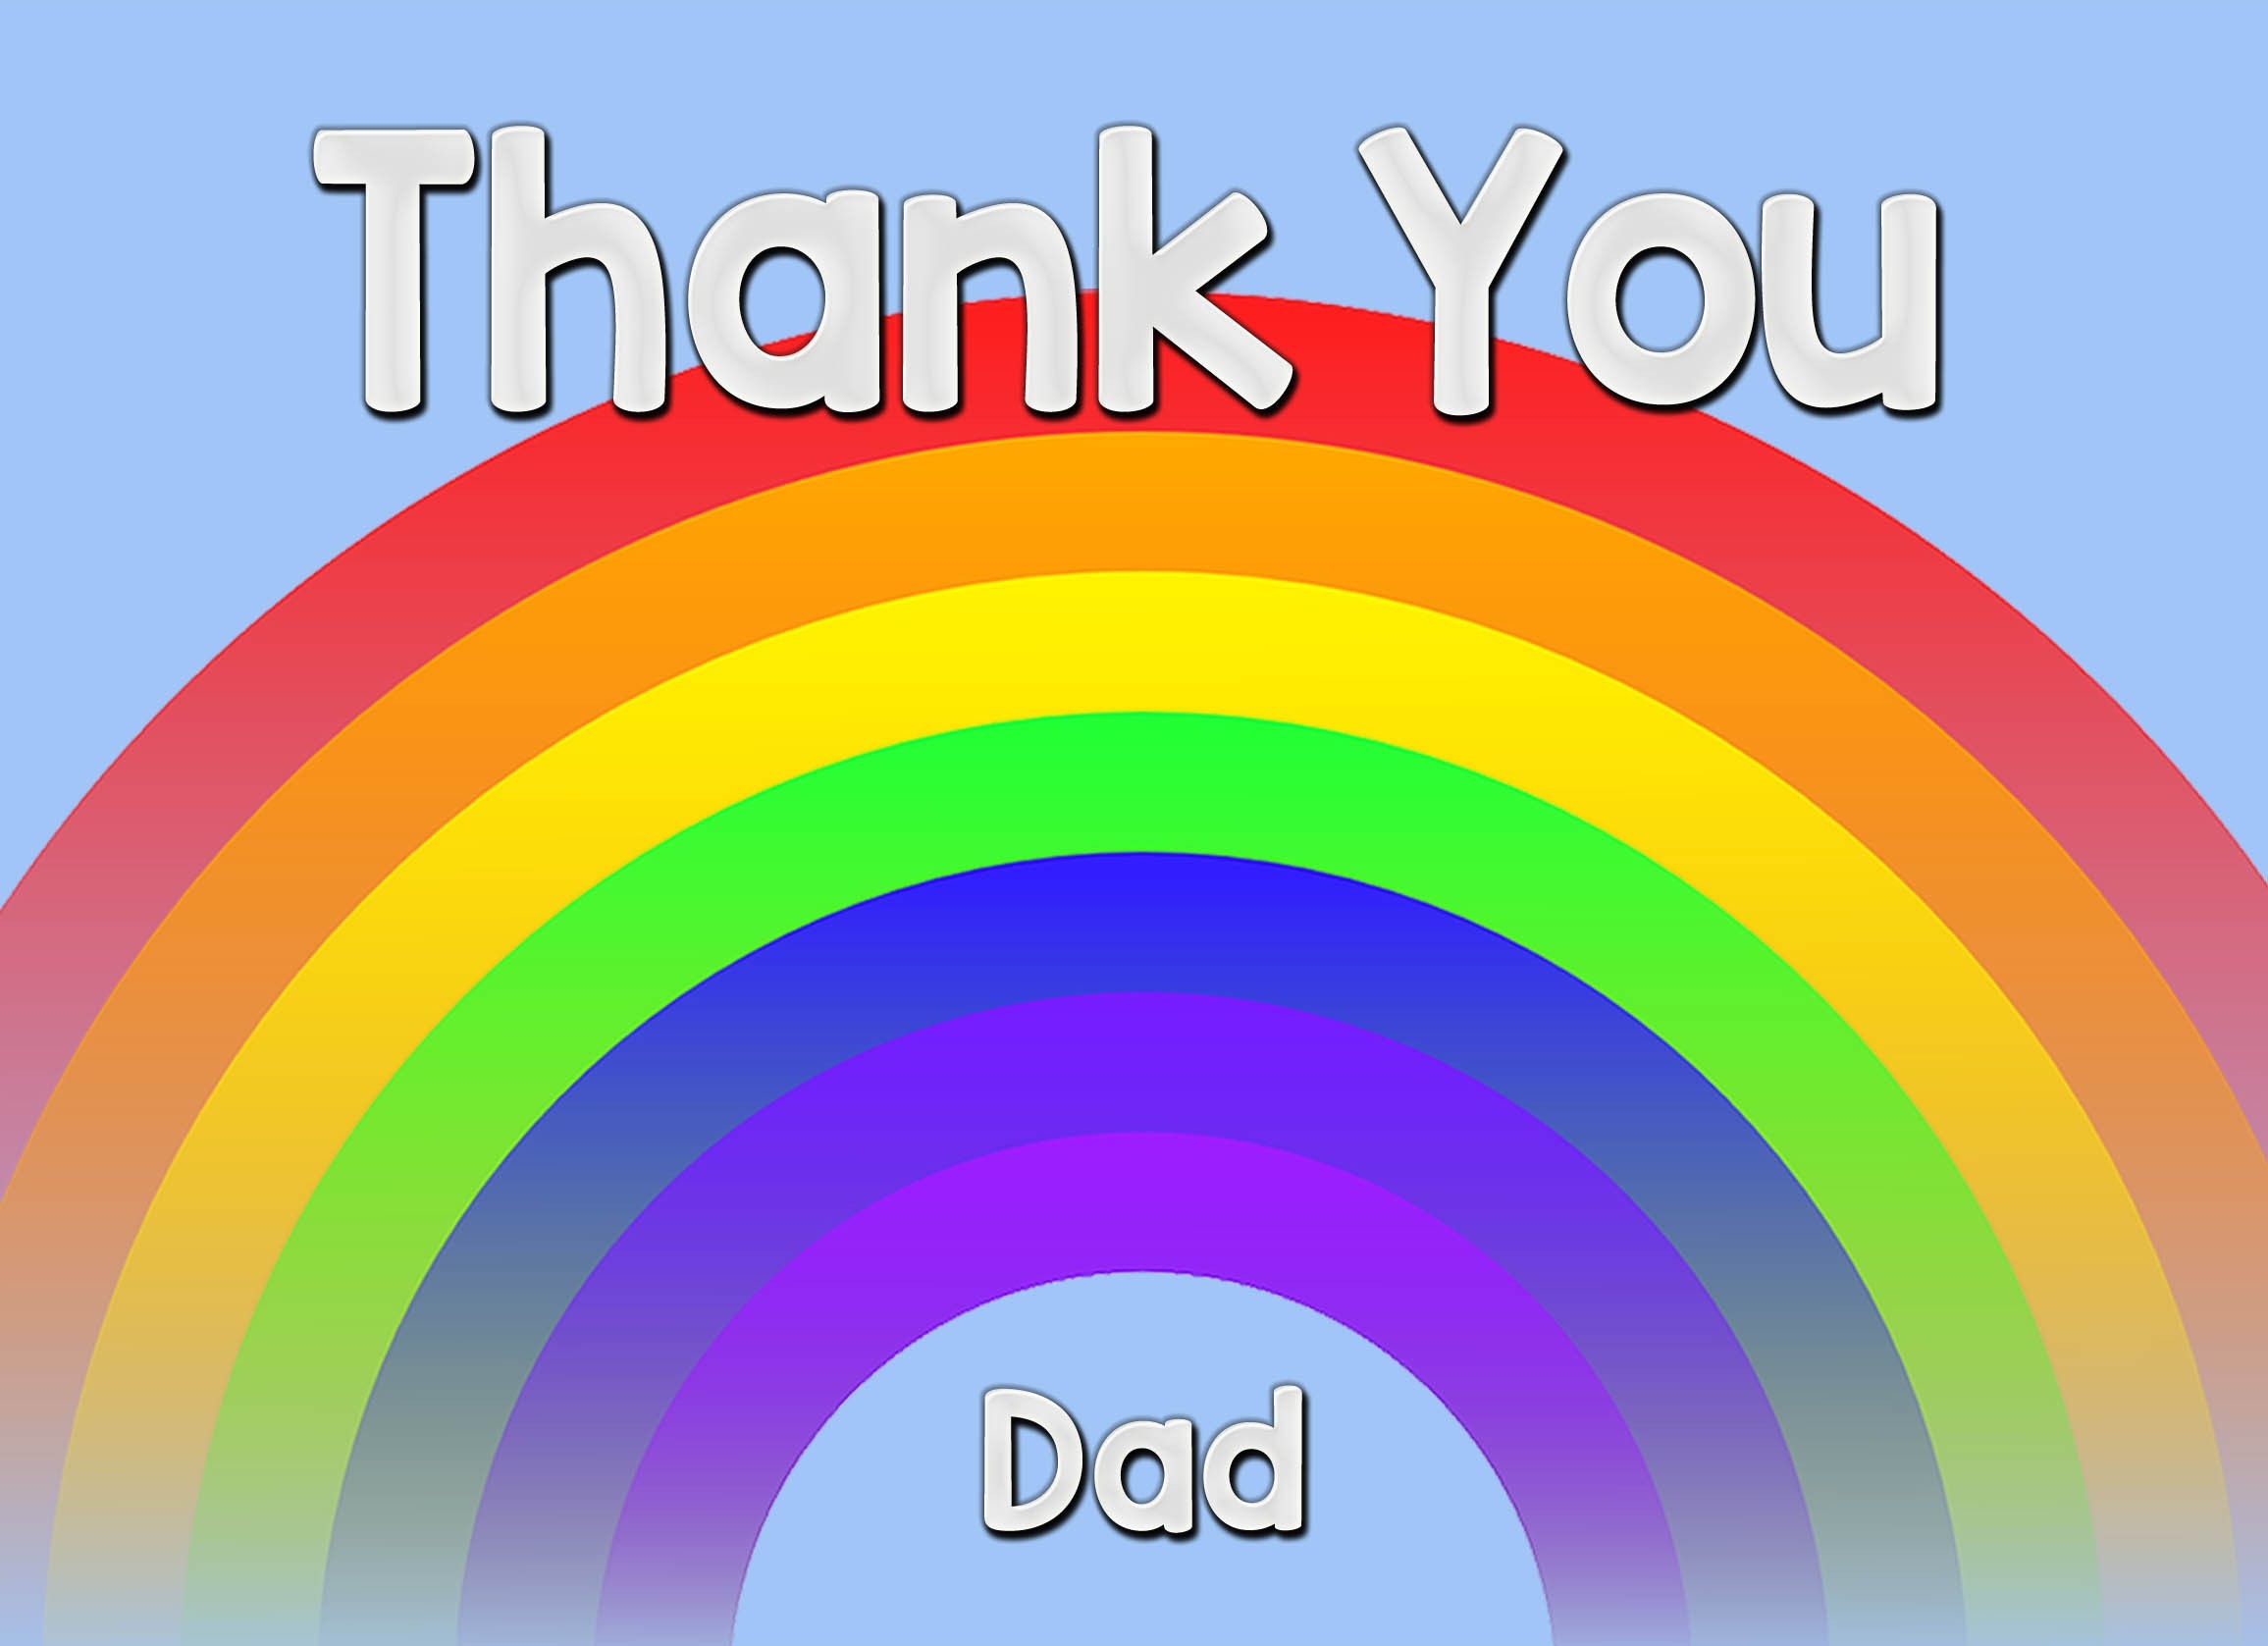 Thank You 'Dad' Rainbow Greeting Card